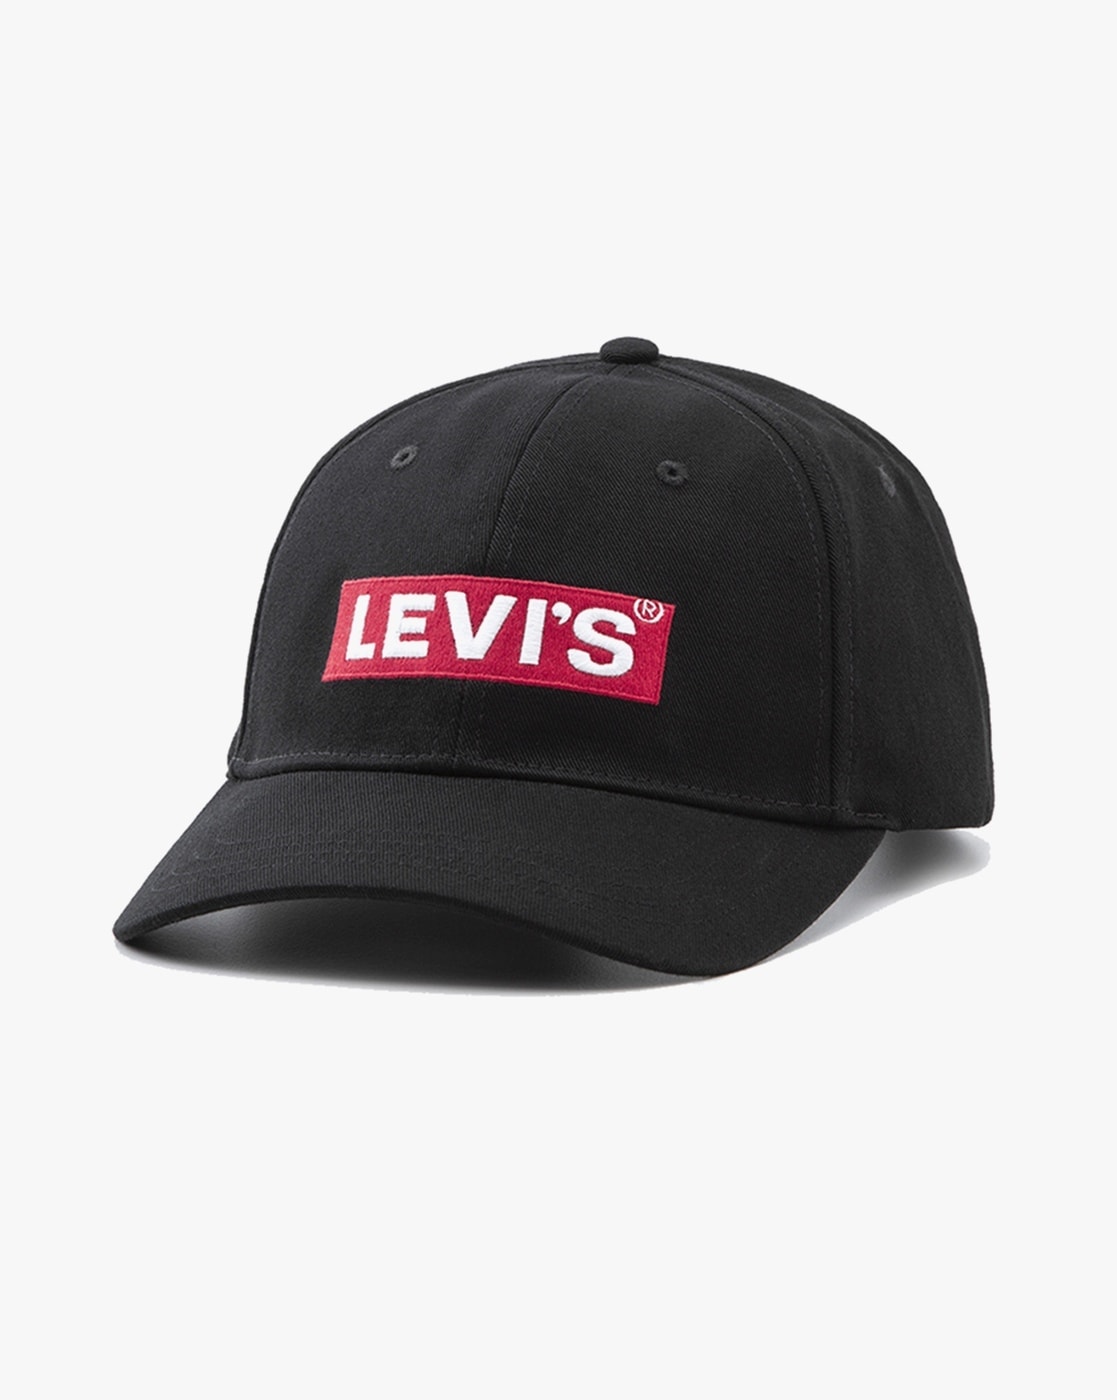 Buy Black Caps & Hats for Men by LEVIS Online 